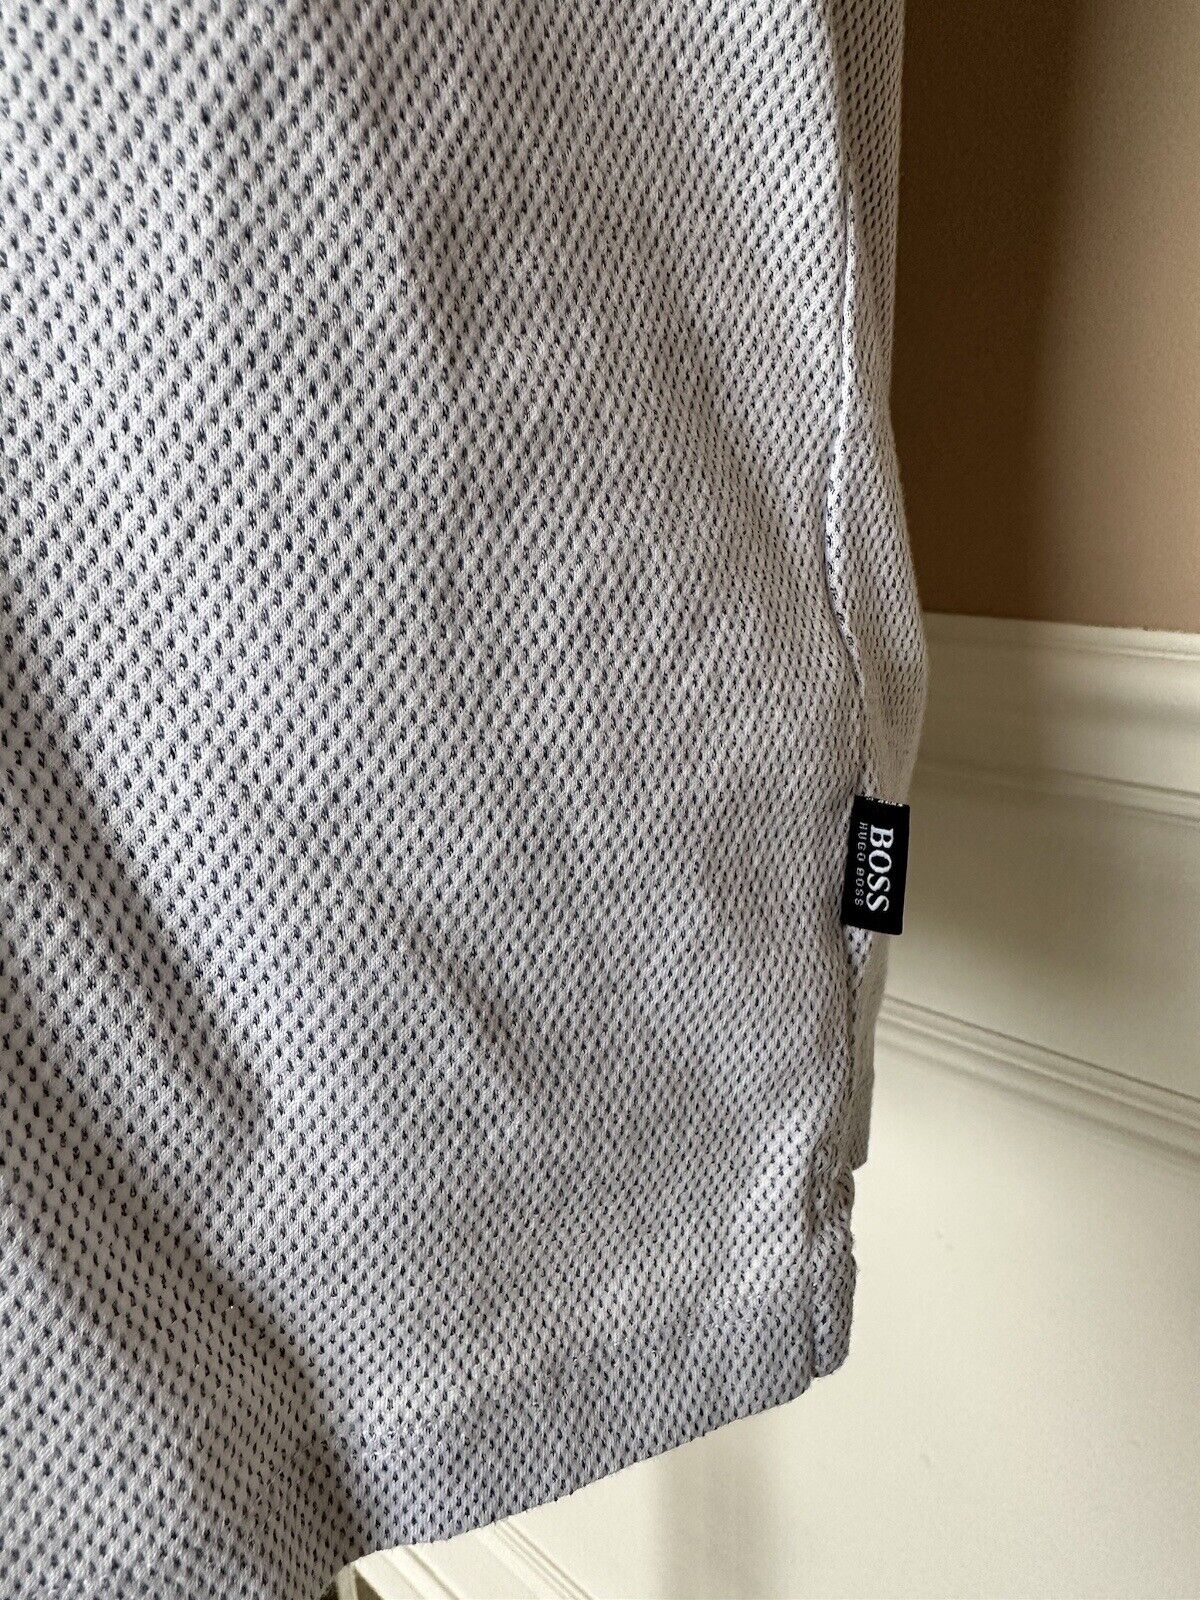 Boss Hugo Boss Black Label Whit/Blue Short Sleeve Polo Shirt L (Fits like S-M)